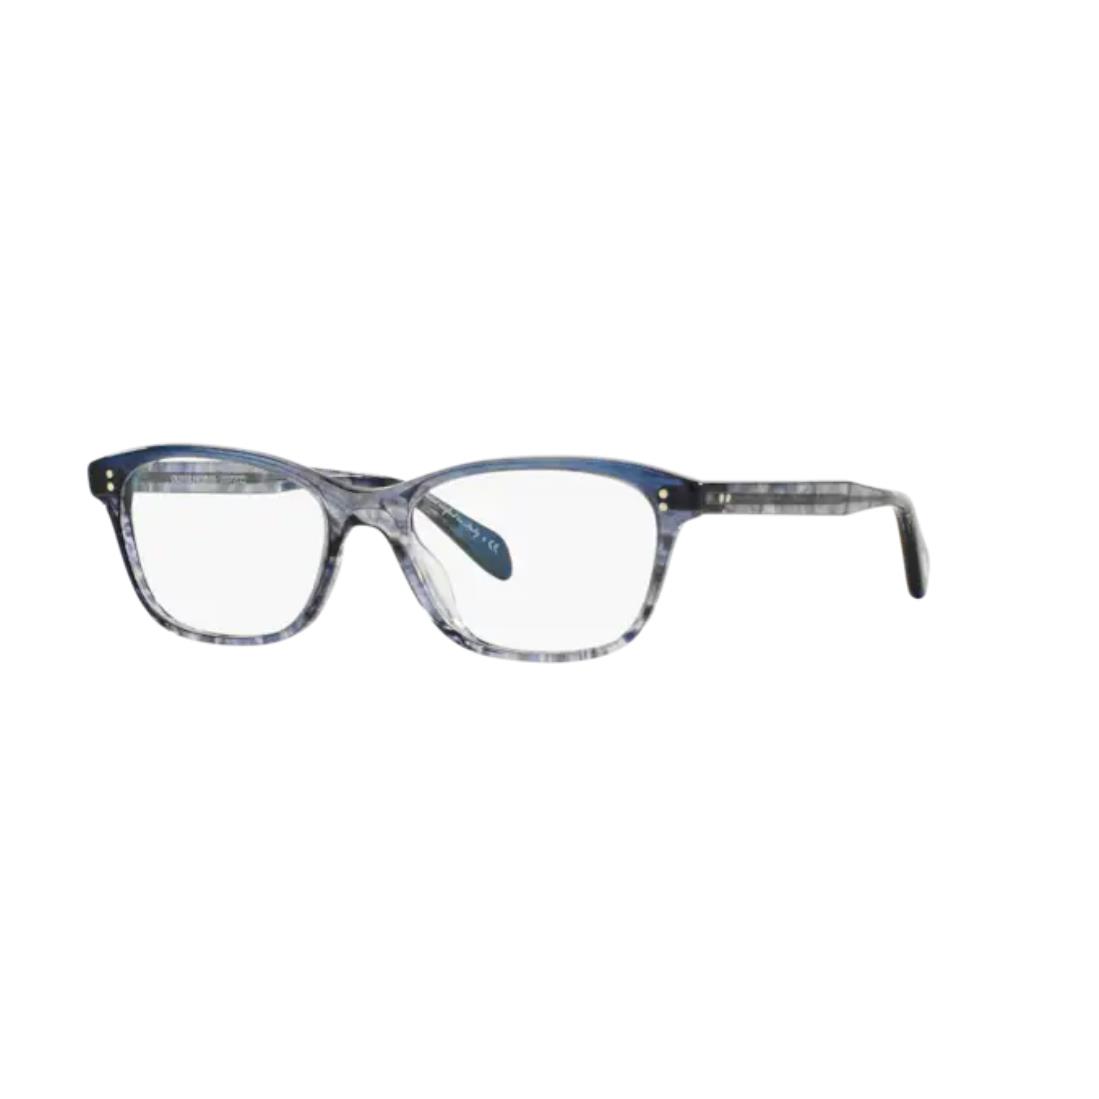 Oliver Peoples 0OV 5224 Ashton 1419 Faded Sea Blue Eyeglasses - Frame: Faded Sea Blue, Lens: